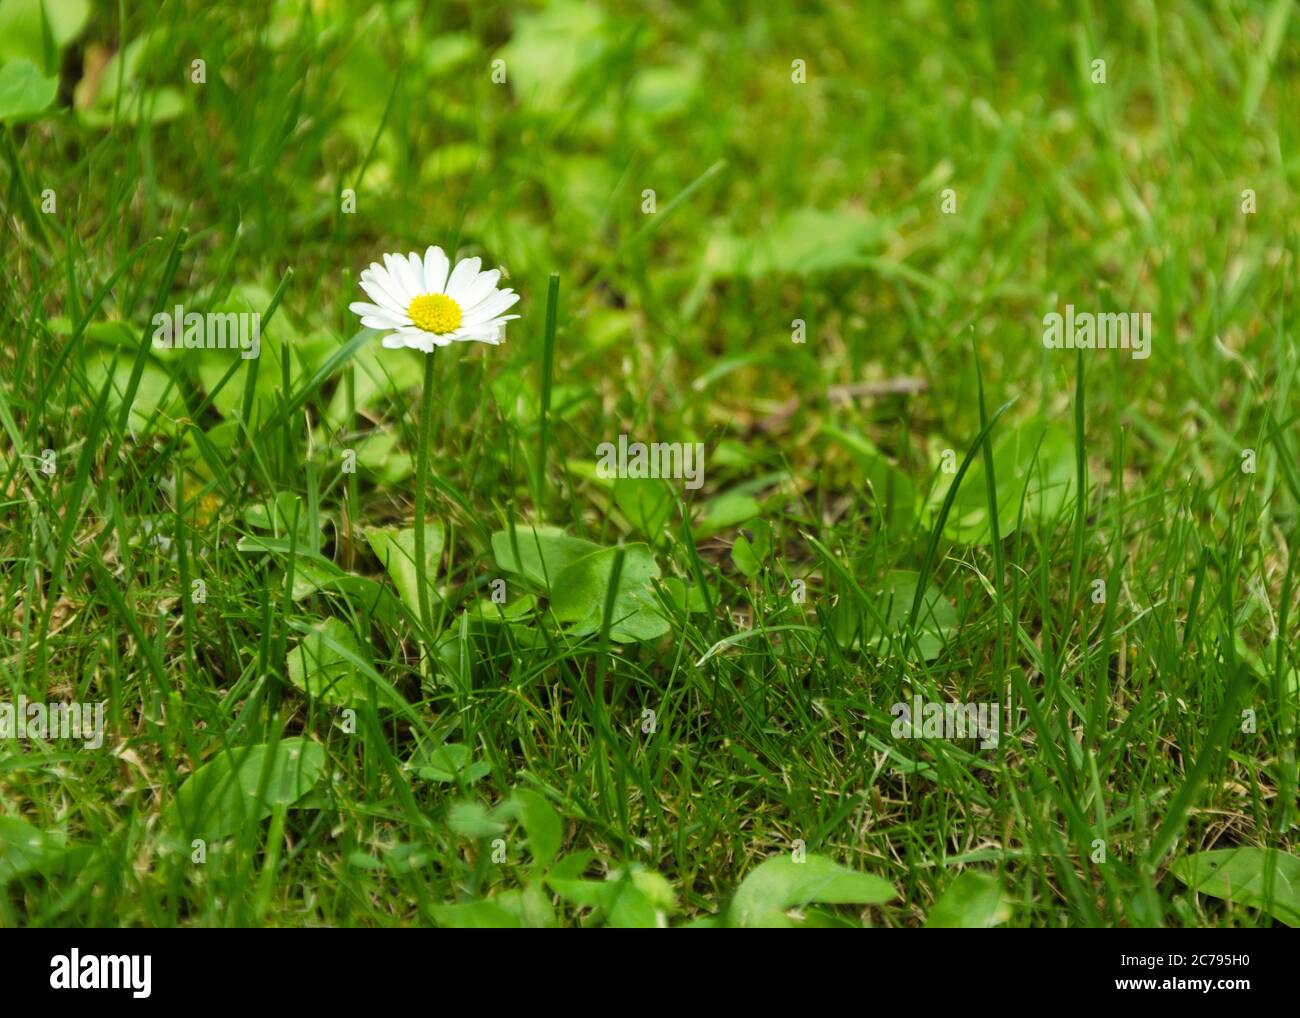 camomile among green grass Stock Photo